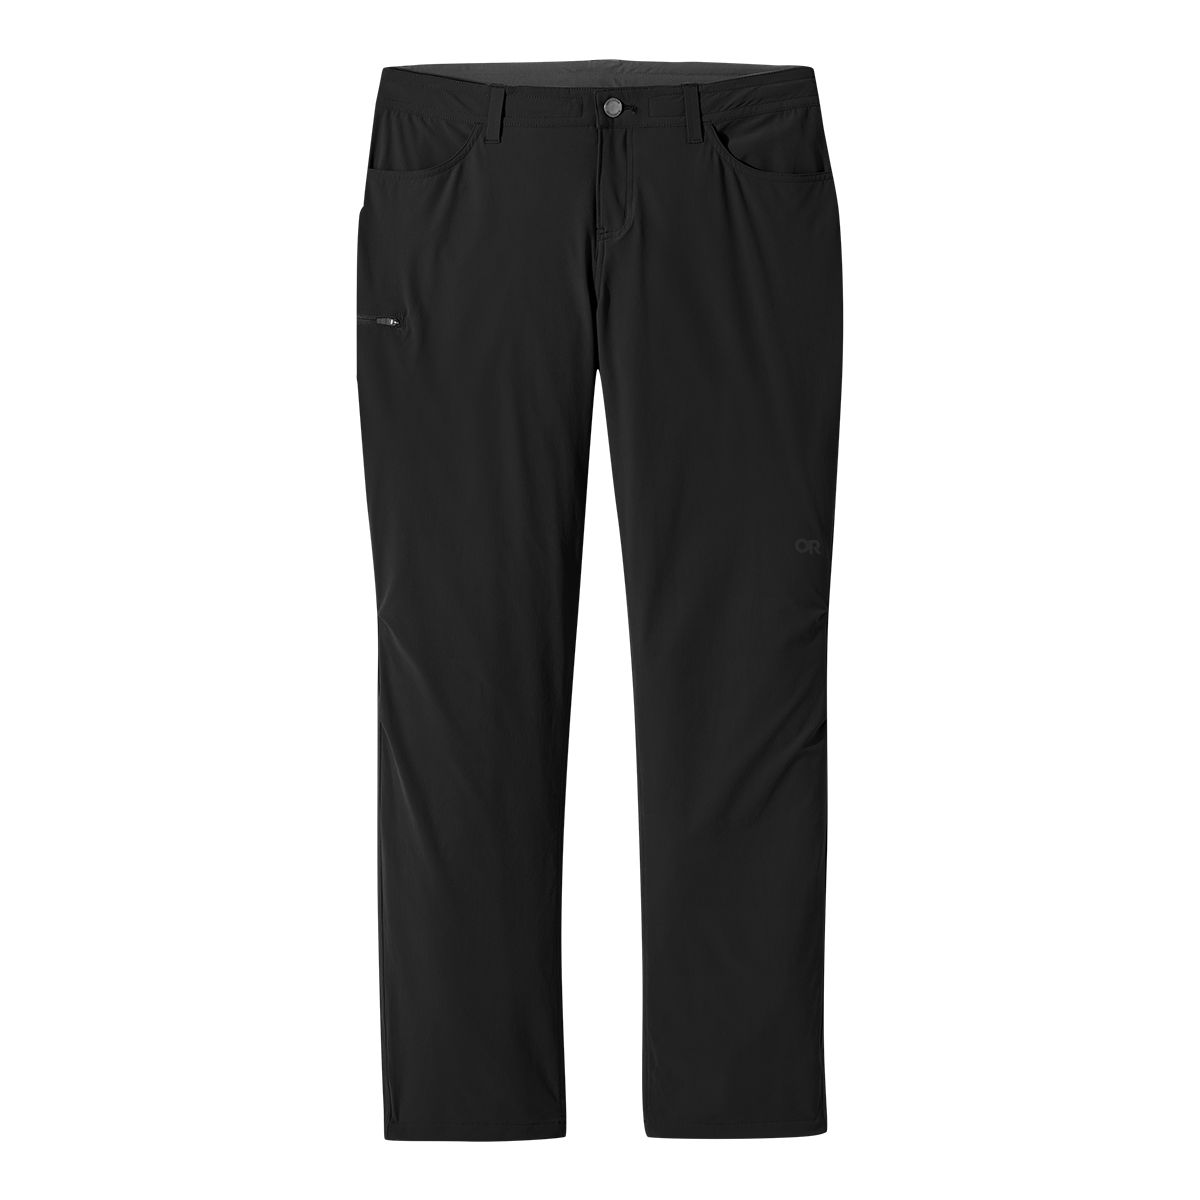 Image of Outdoor Research Women's Ferrosi Short Inseam Pants